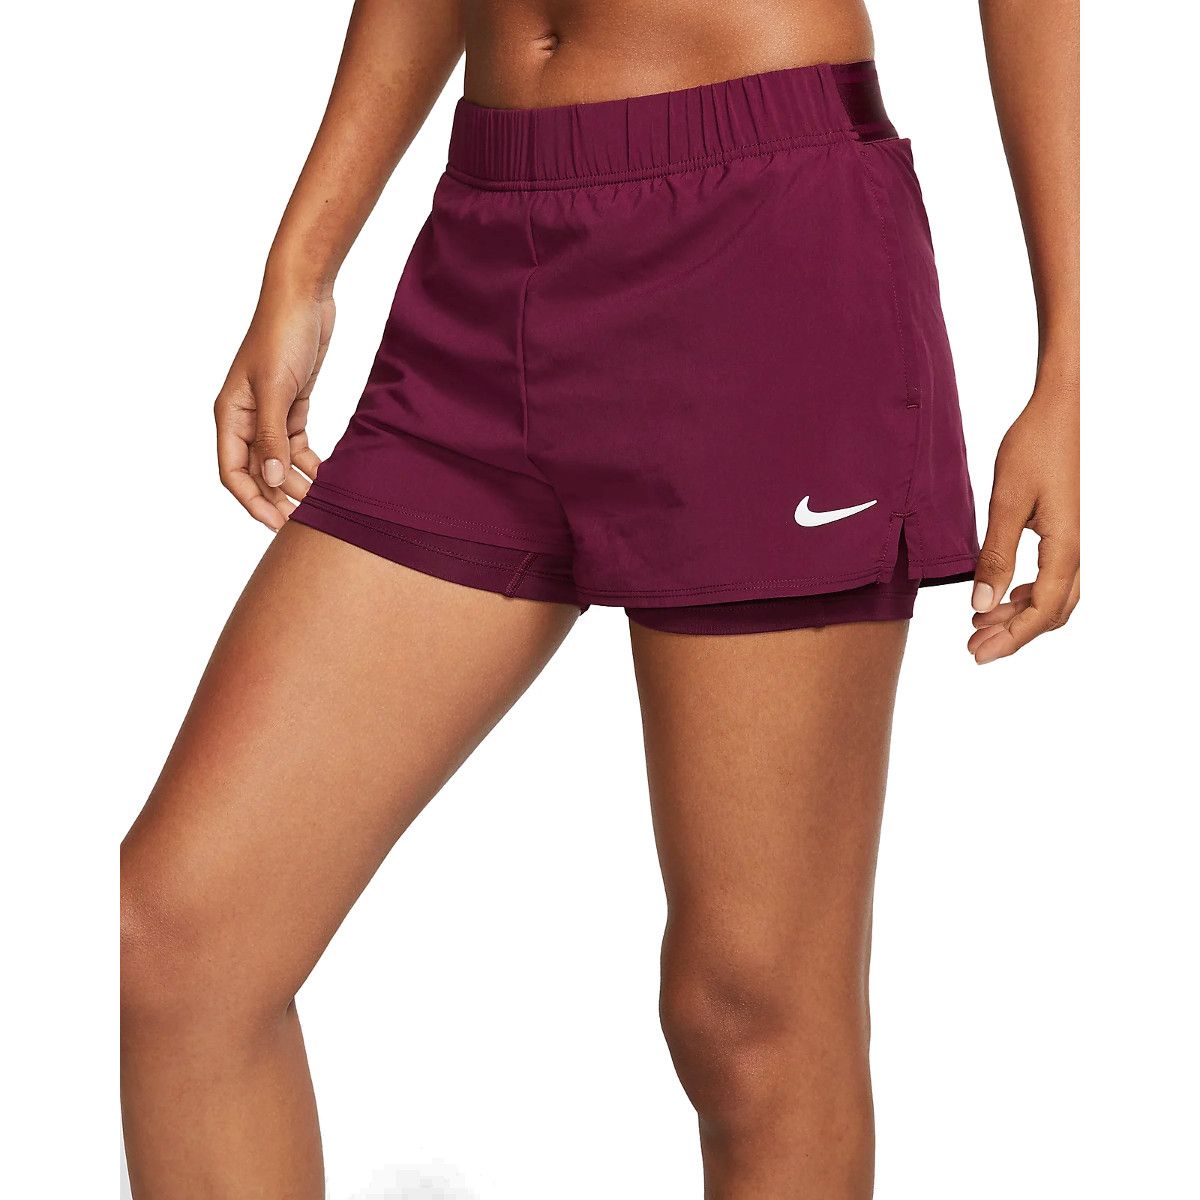 nike women's court flex pure tennis shorts, Off 78%, www.spotsclick.com